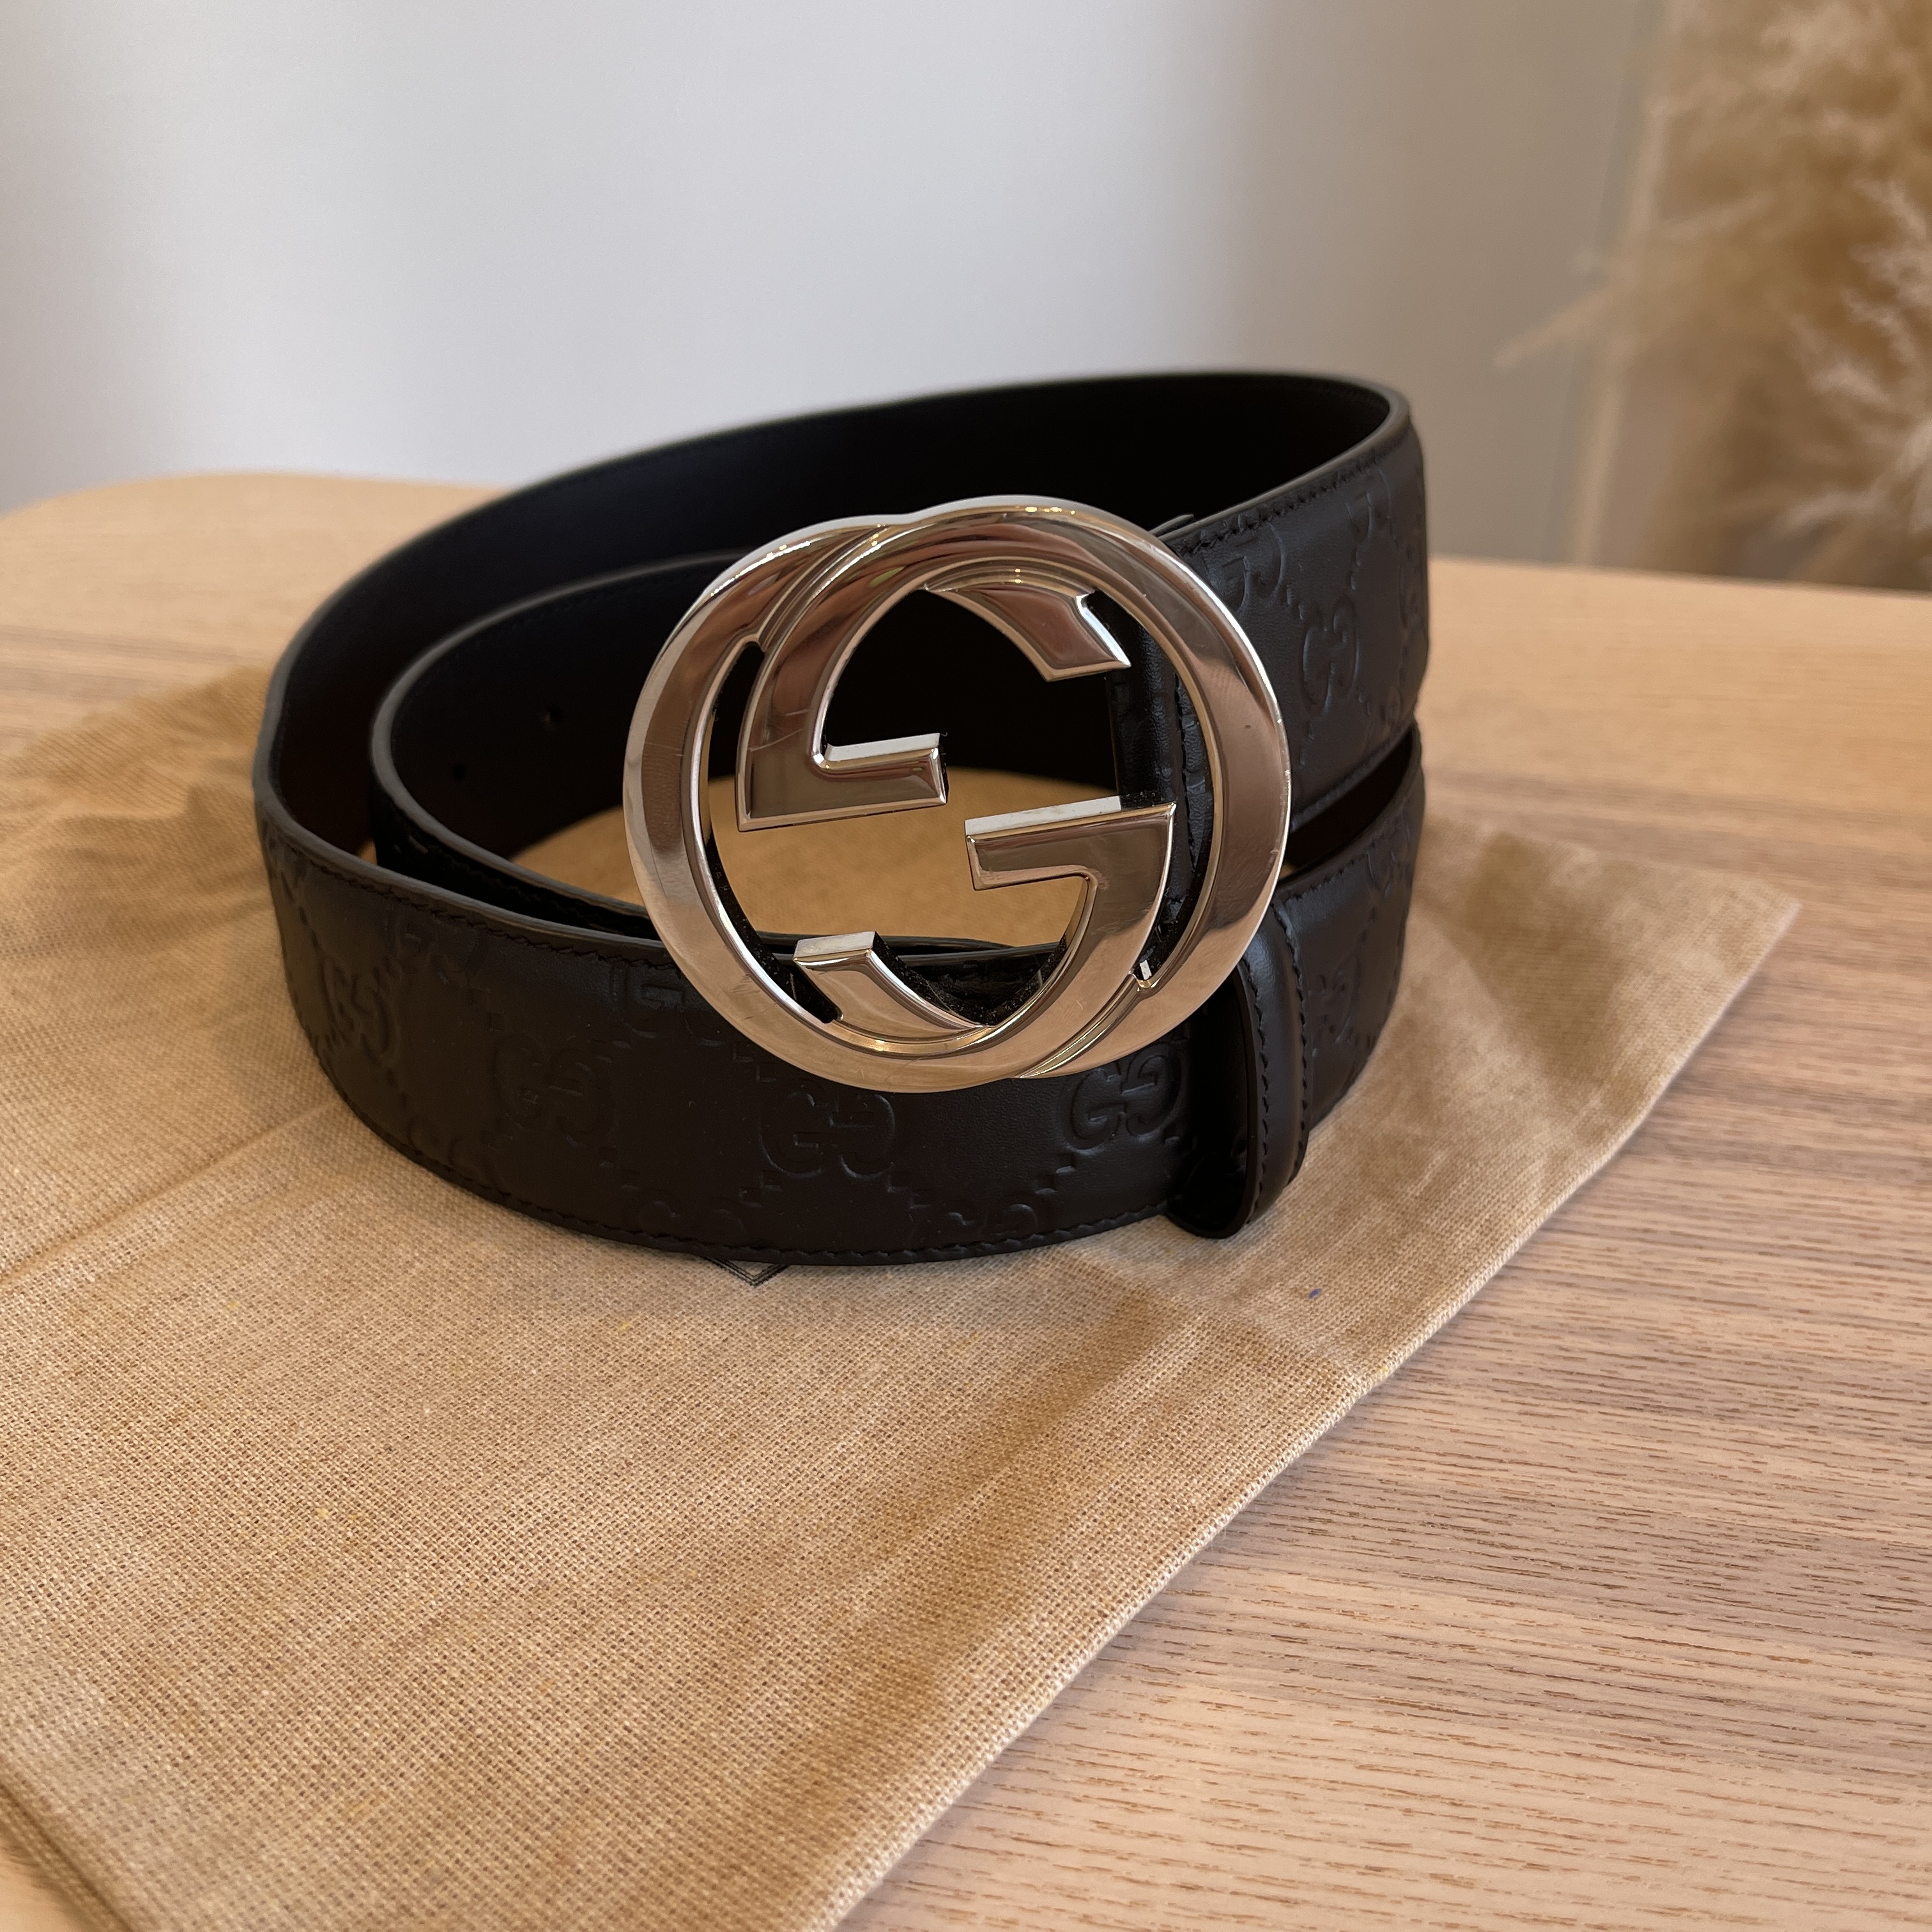 Gucci Signature leather belt